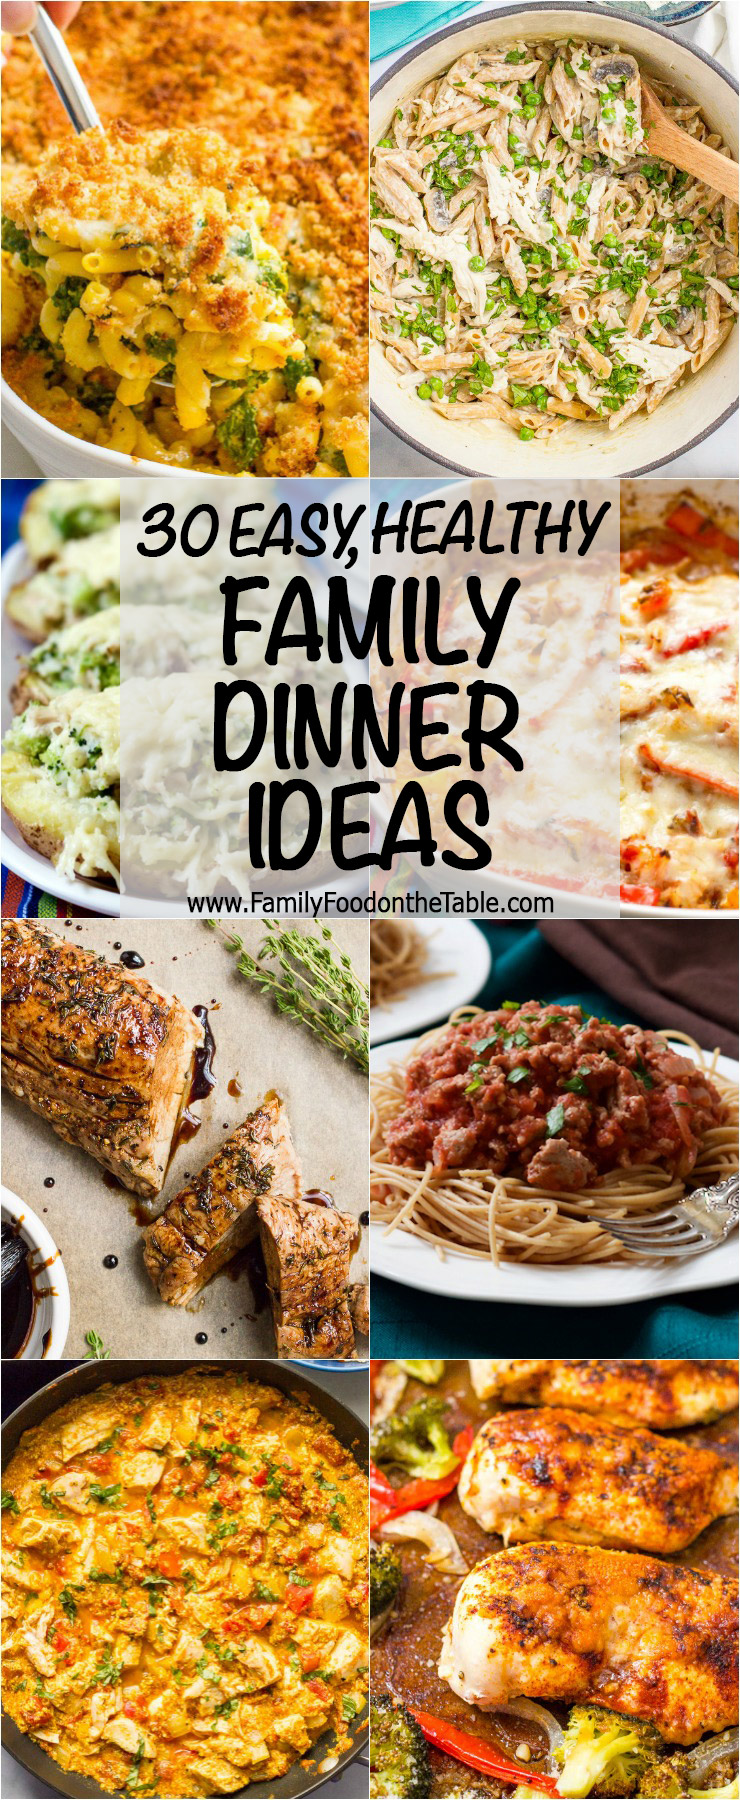 30 easy healthy family dinner ideas - family food on the table